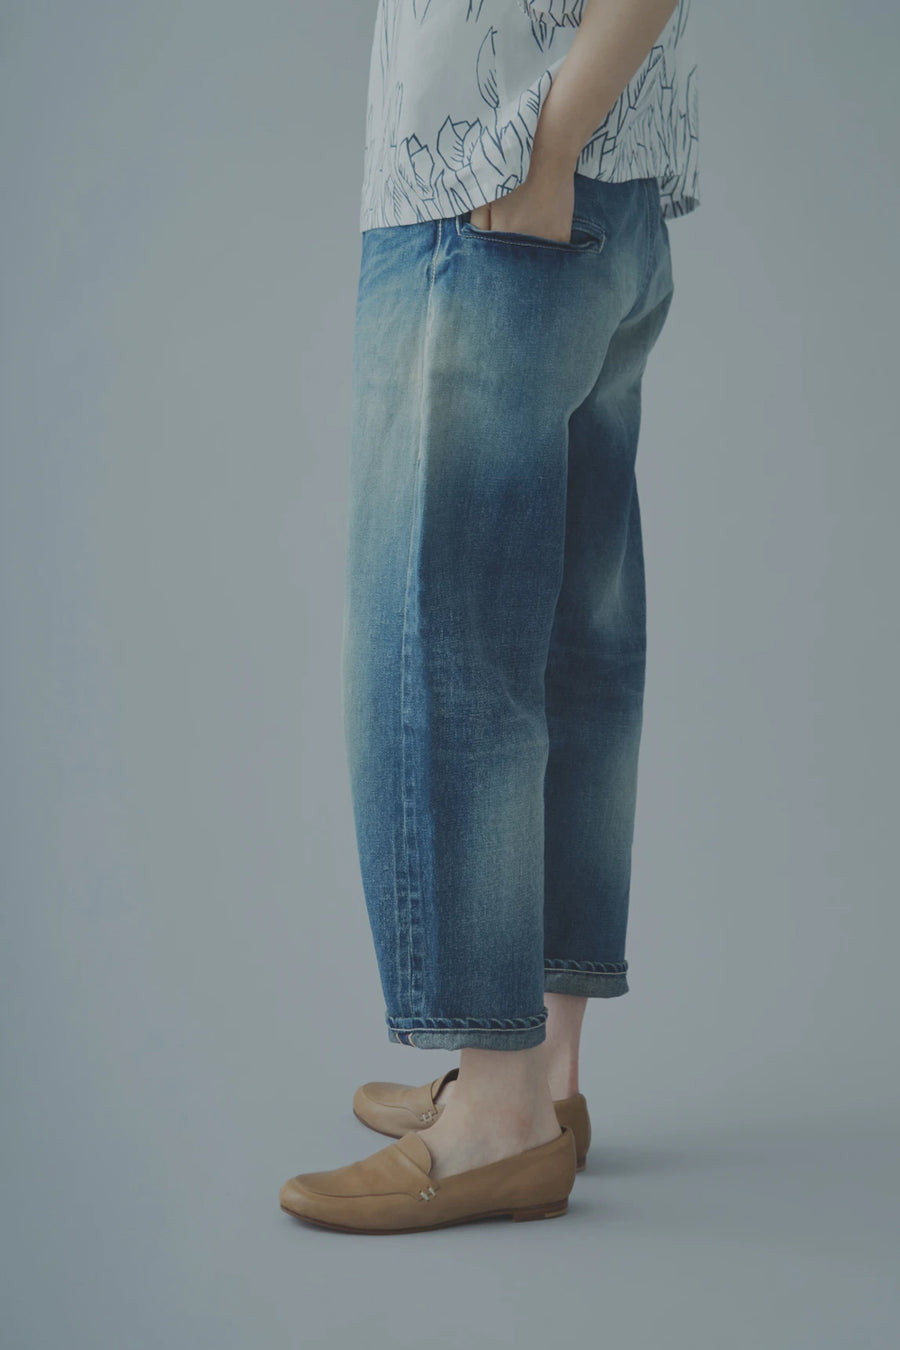 MINA PERHONEN - Always Roll-Up Jeans in Light Blue